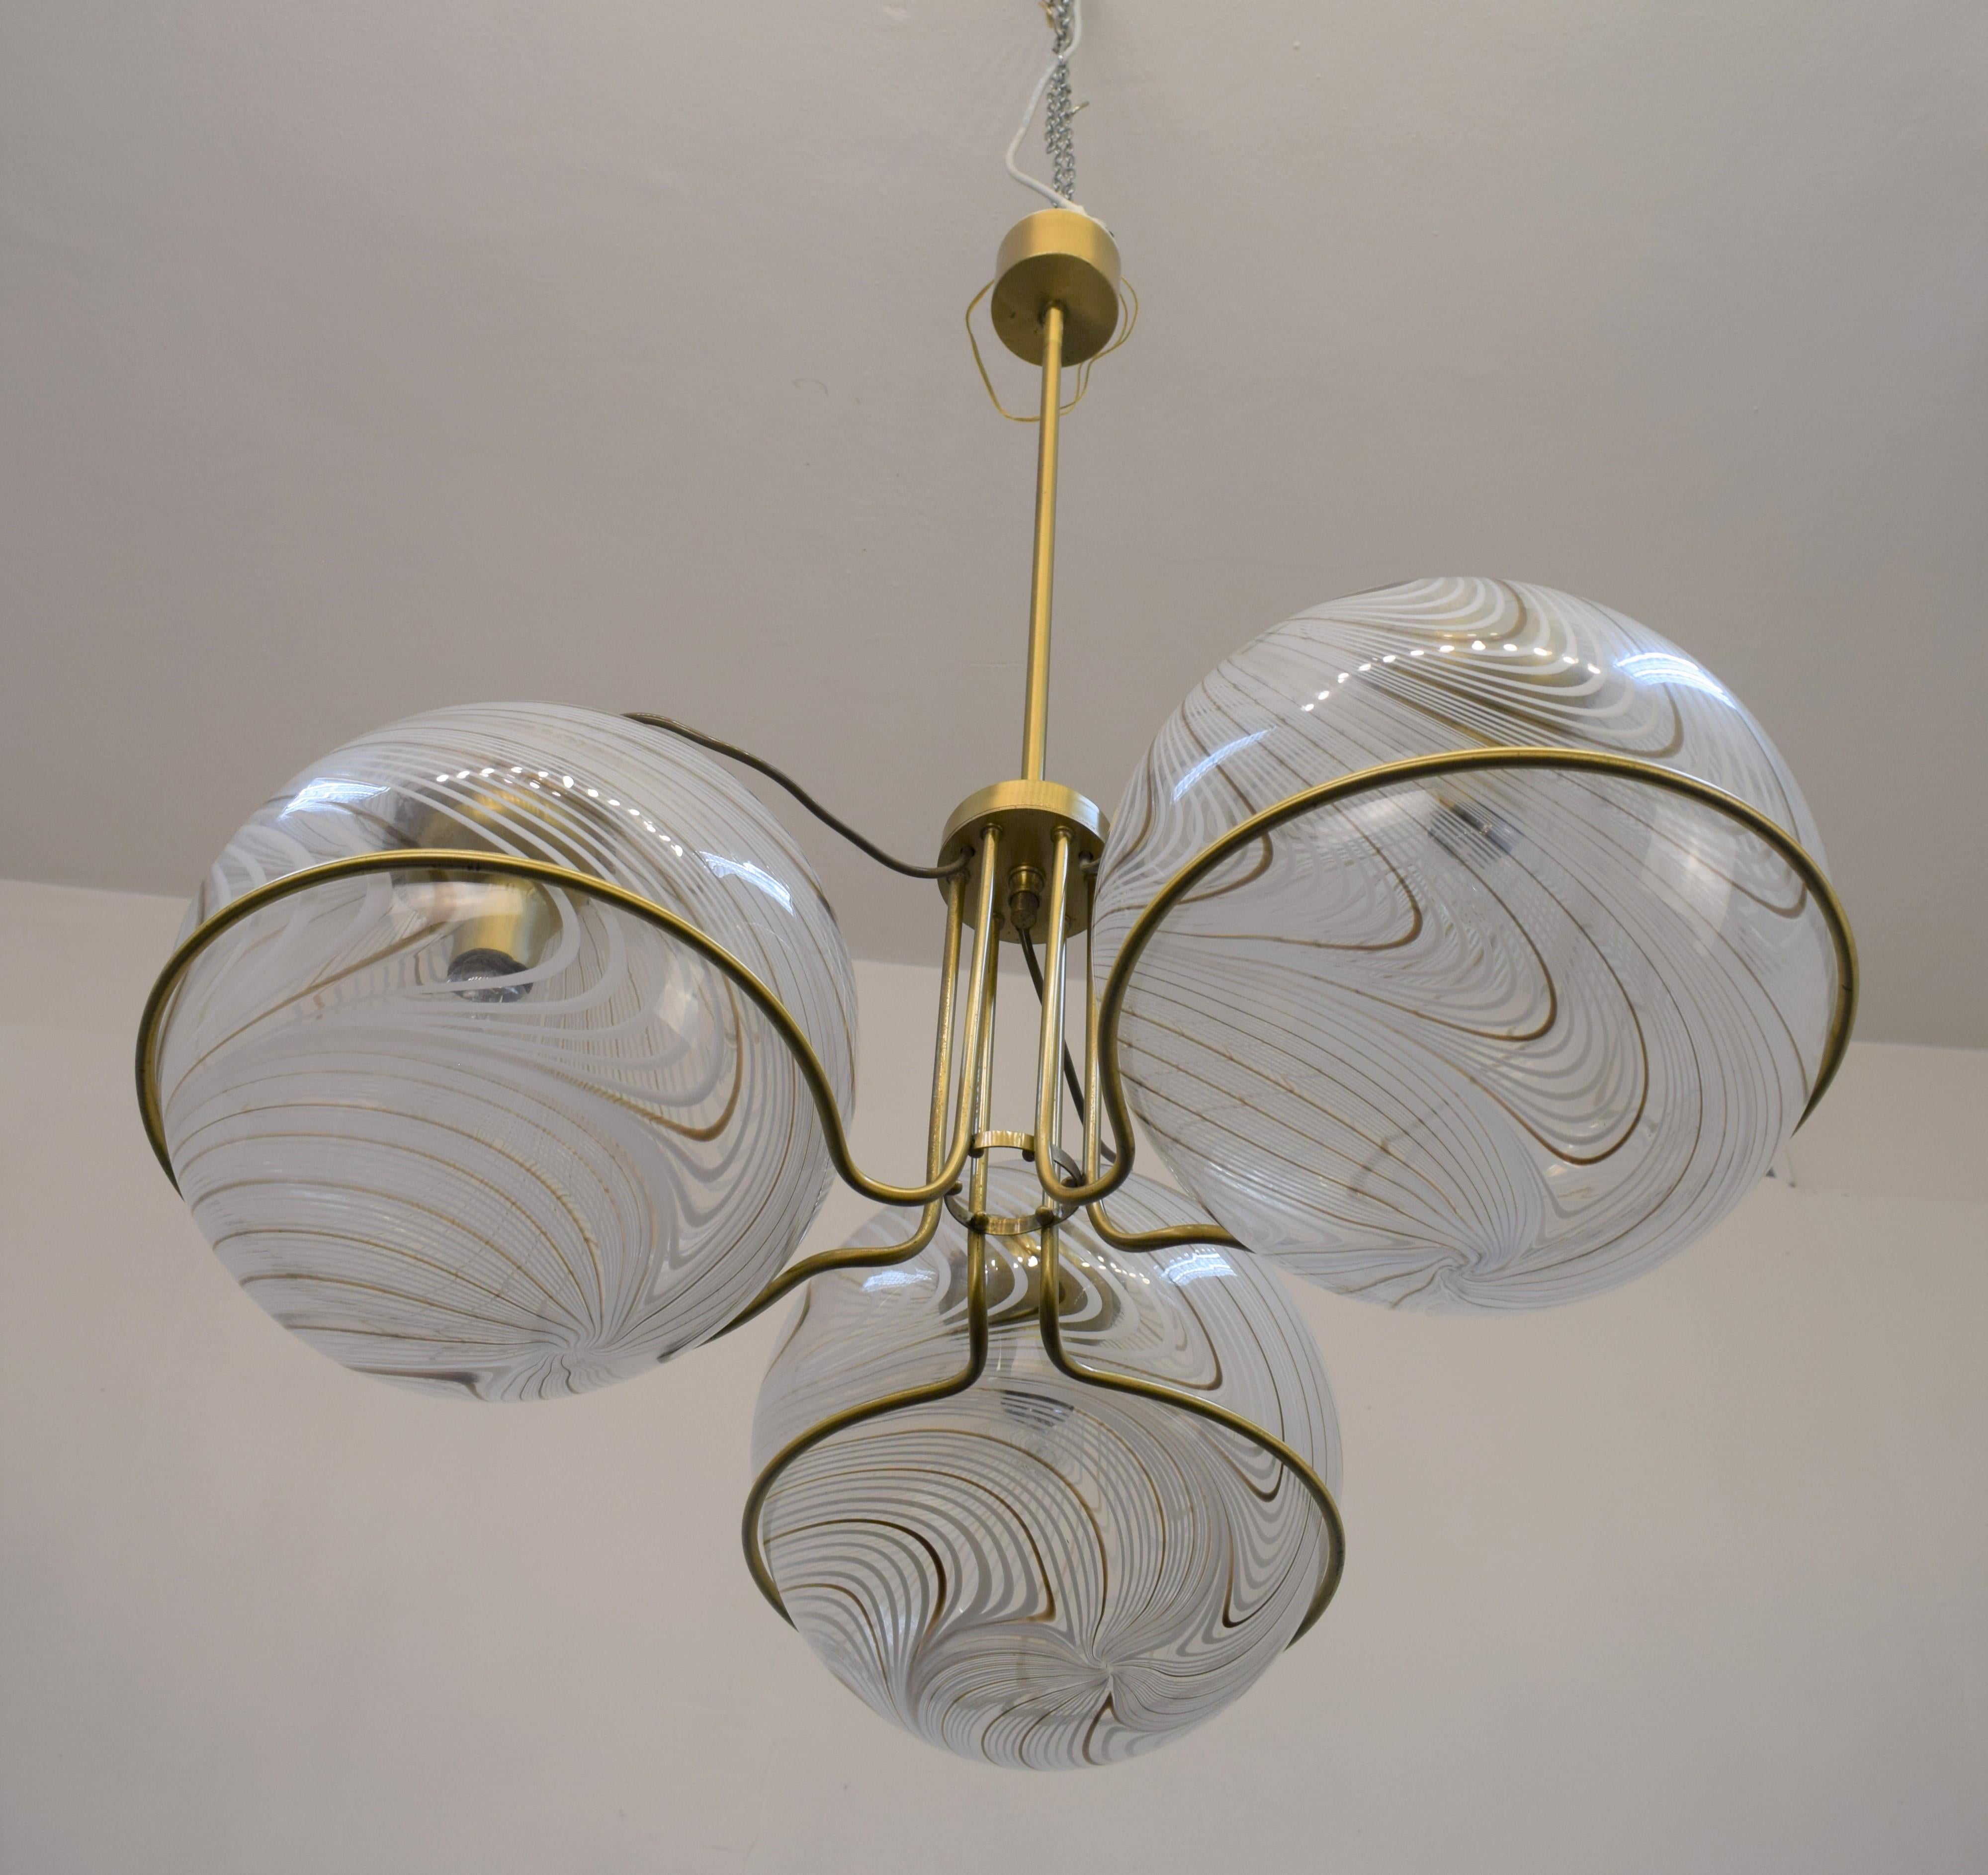 Italian chandelier by Lino Tagliapietra for La Murrina, 3 lights, 1970s.

Dimensions: H= 102 cm; D= 66 cm.